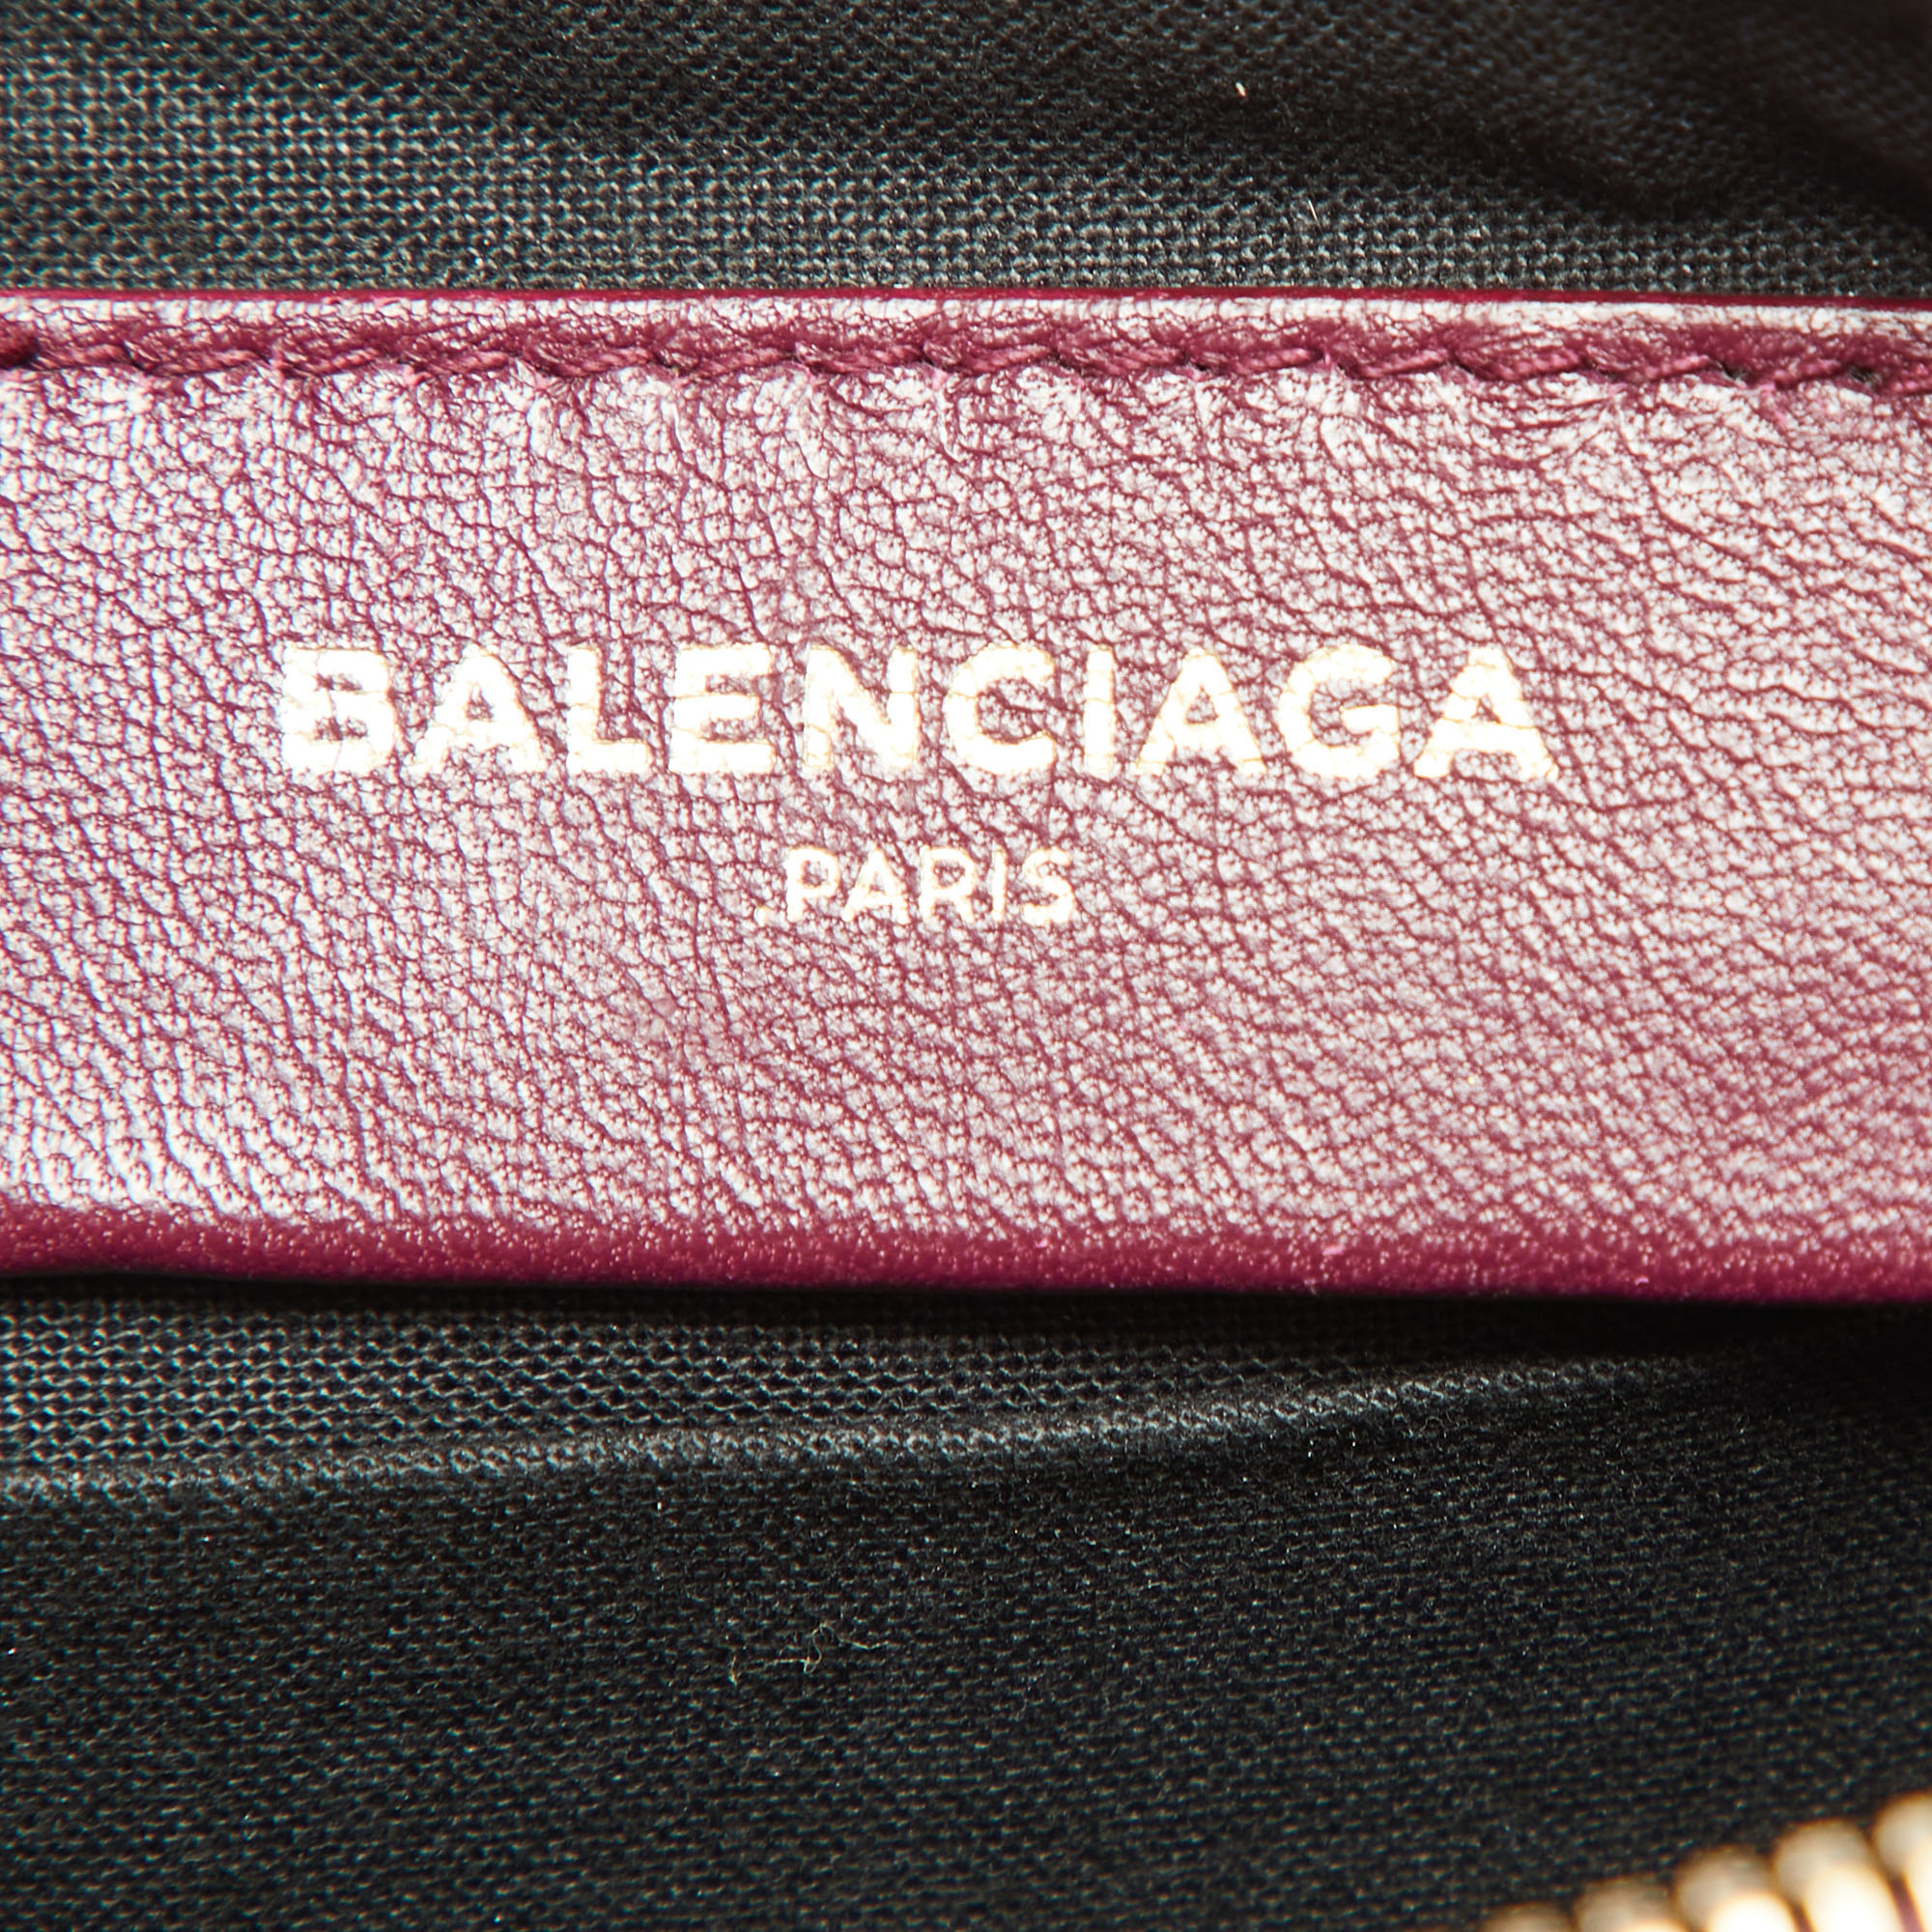 Balenciaga Bordeaux Croc Embossed Leather Zipper Clutch